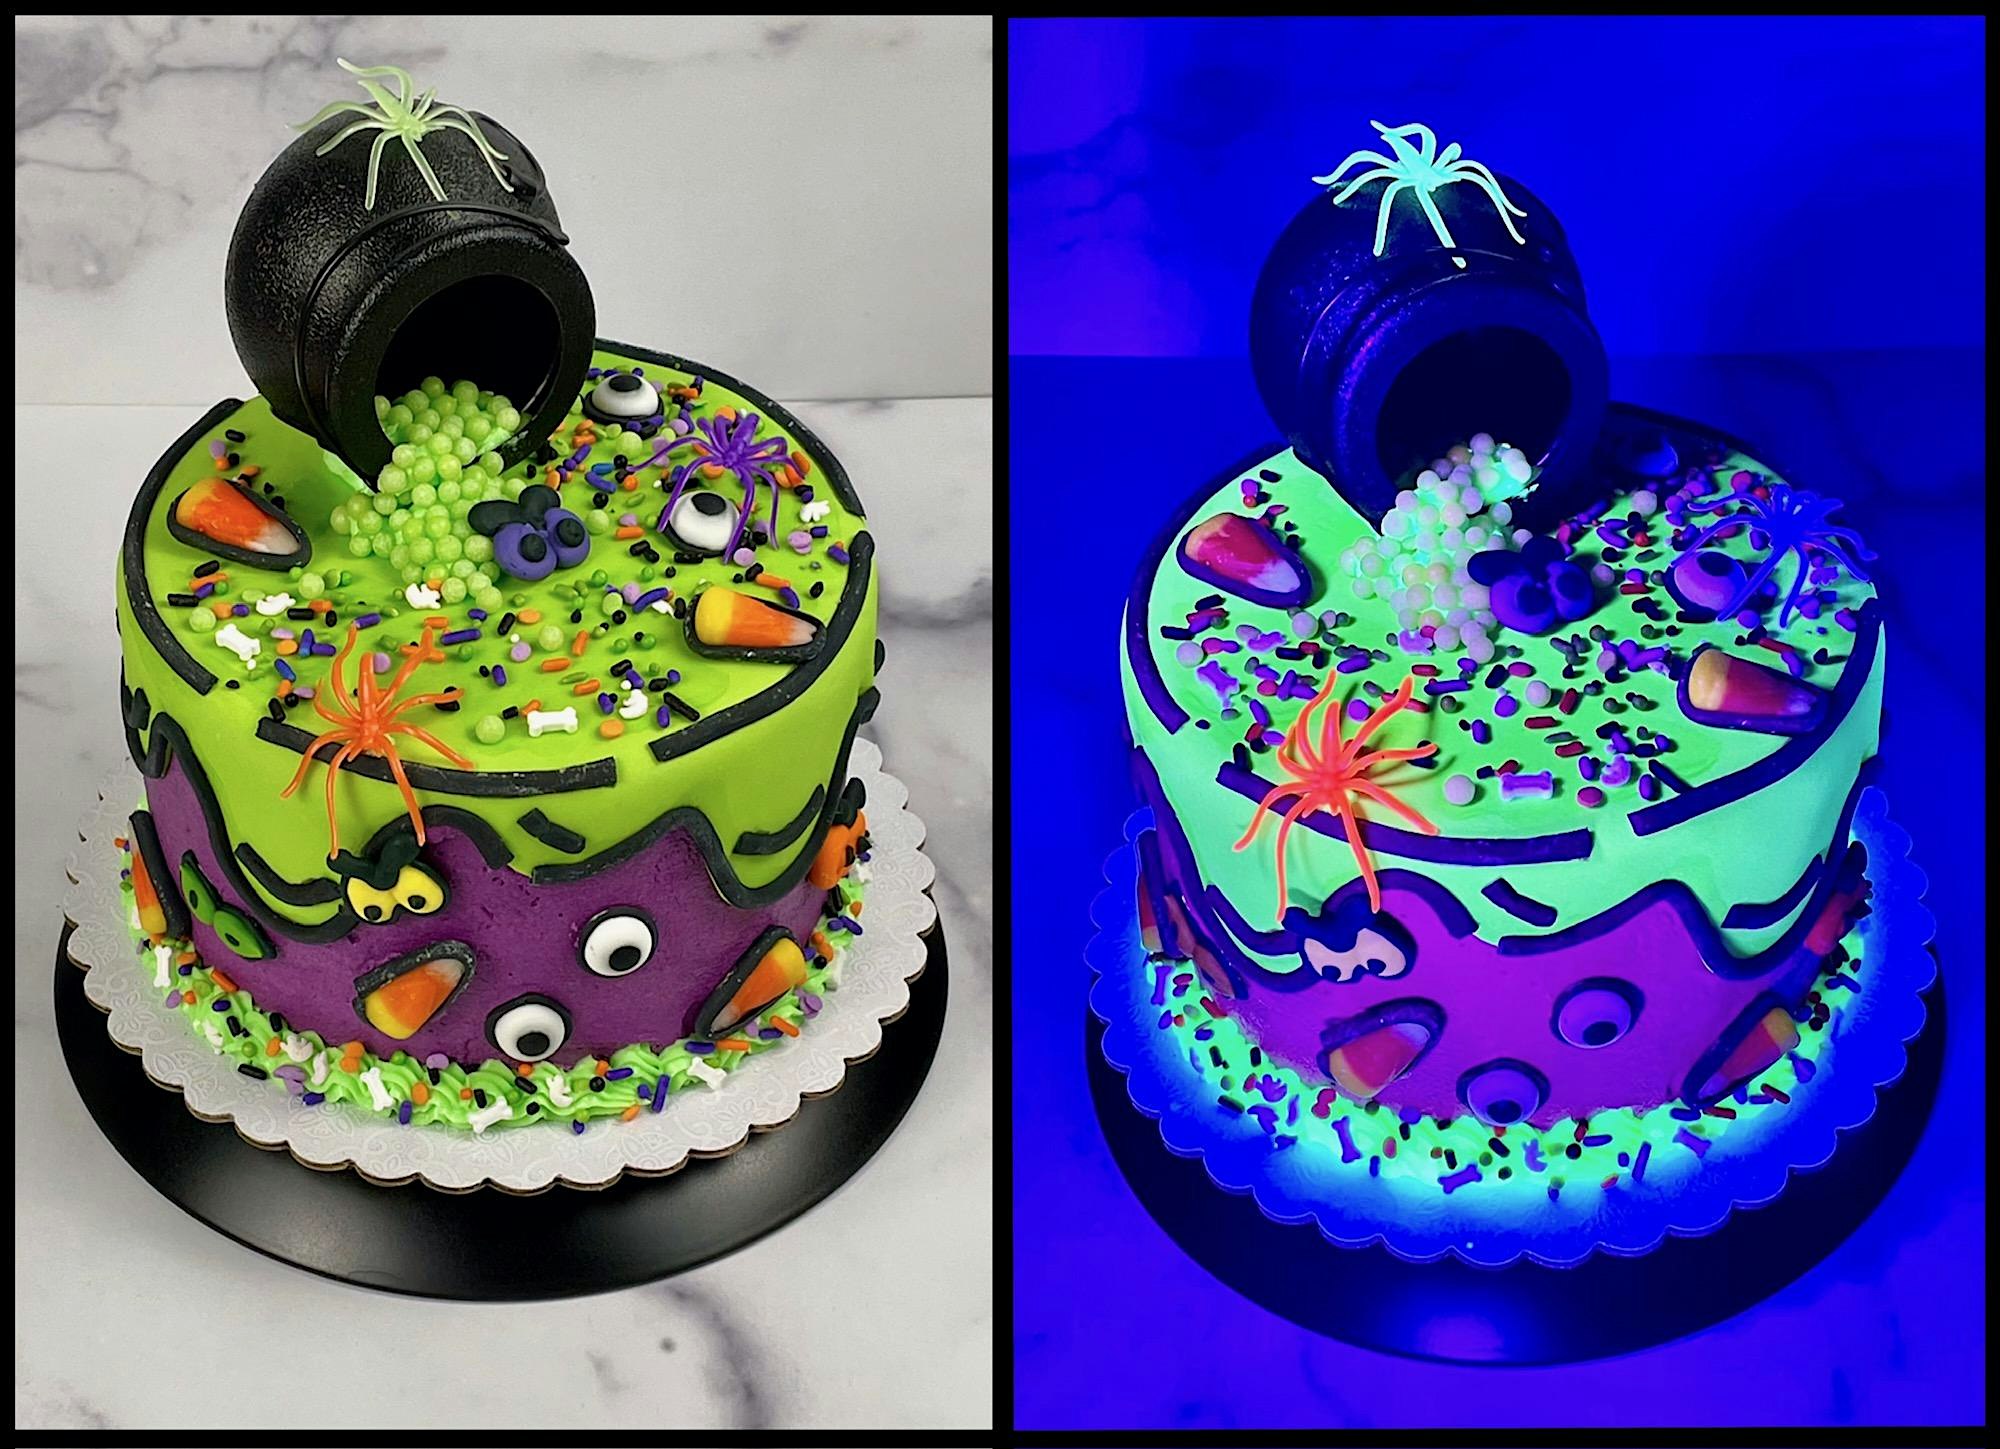 Private Cake4Kids:Glow In The Dark Cauldron Cartoon Cake Decorating Class